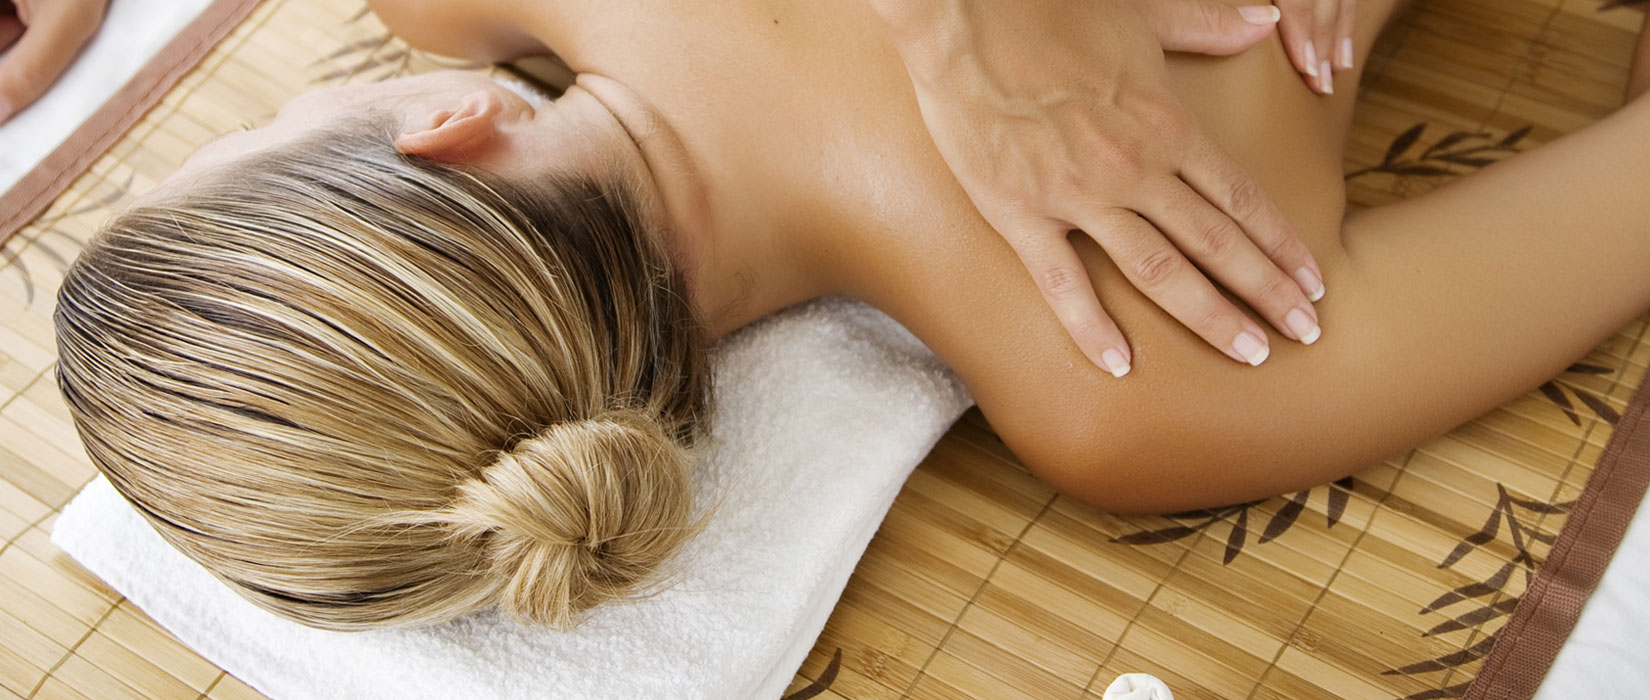 Saskatoon saskatchewan massage therapy